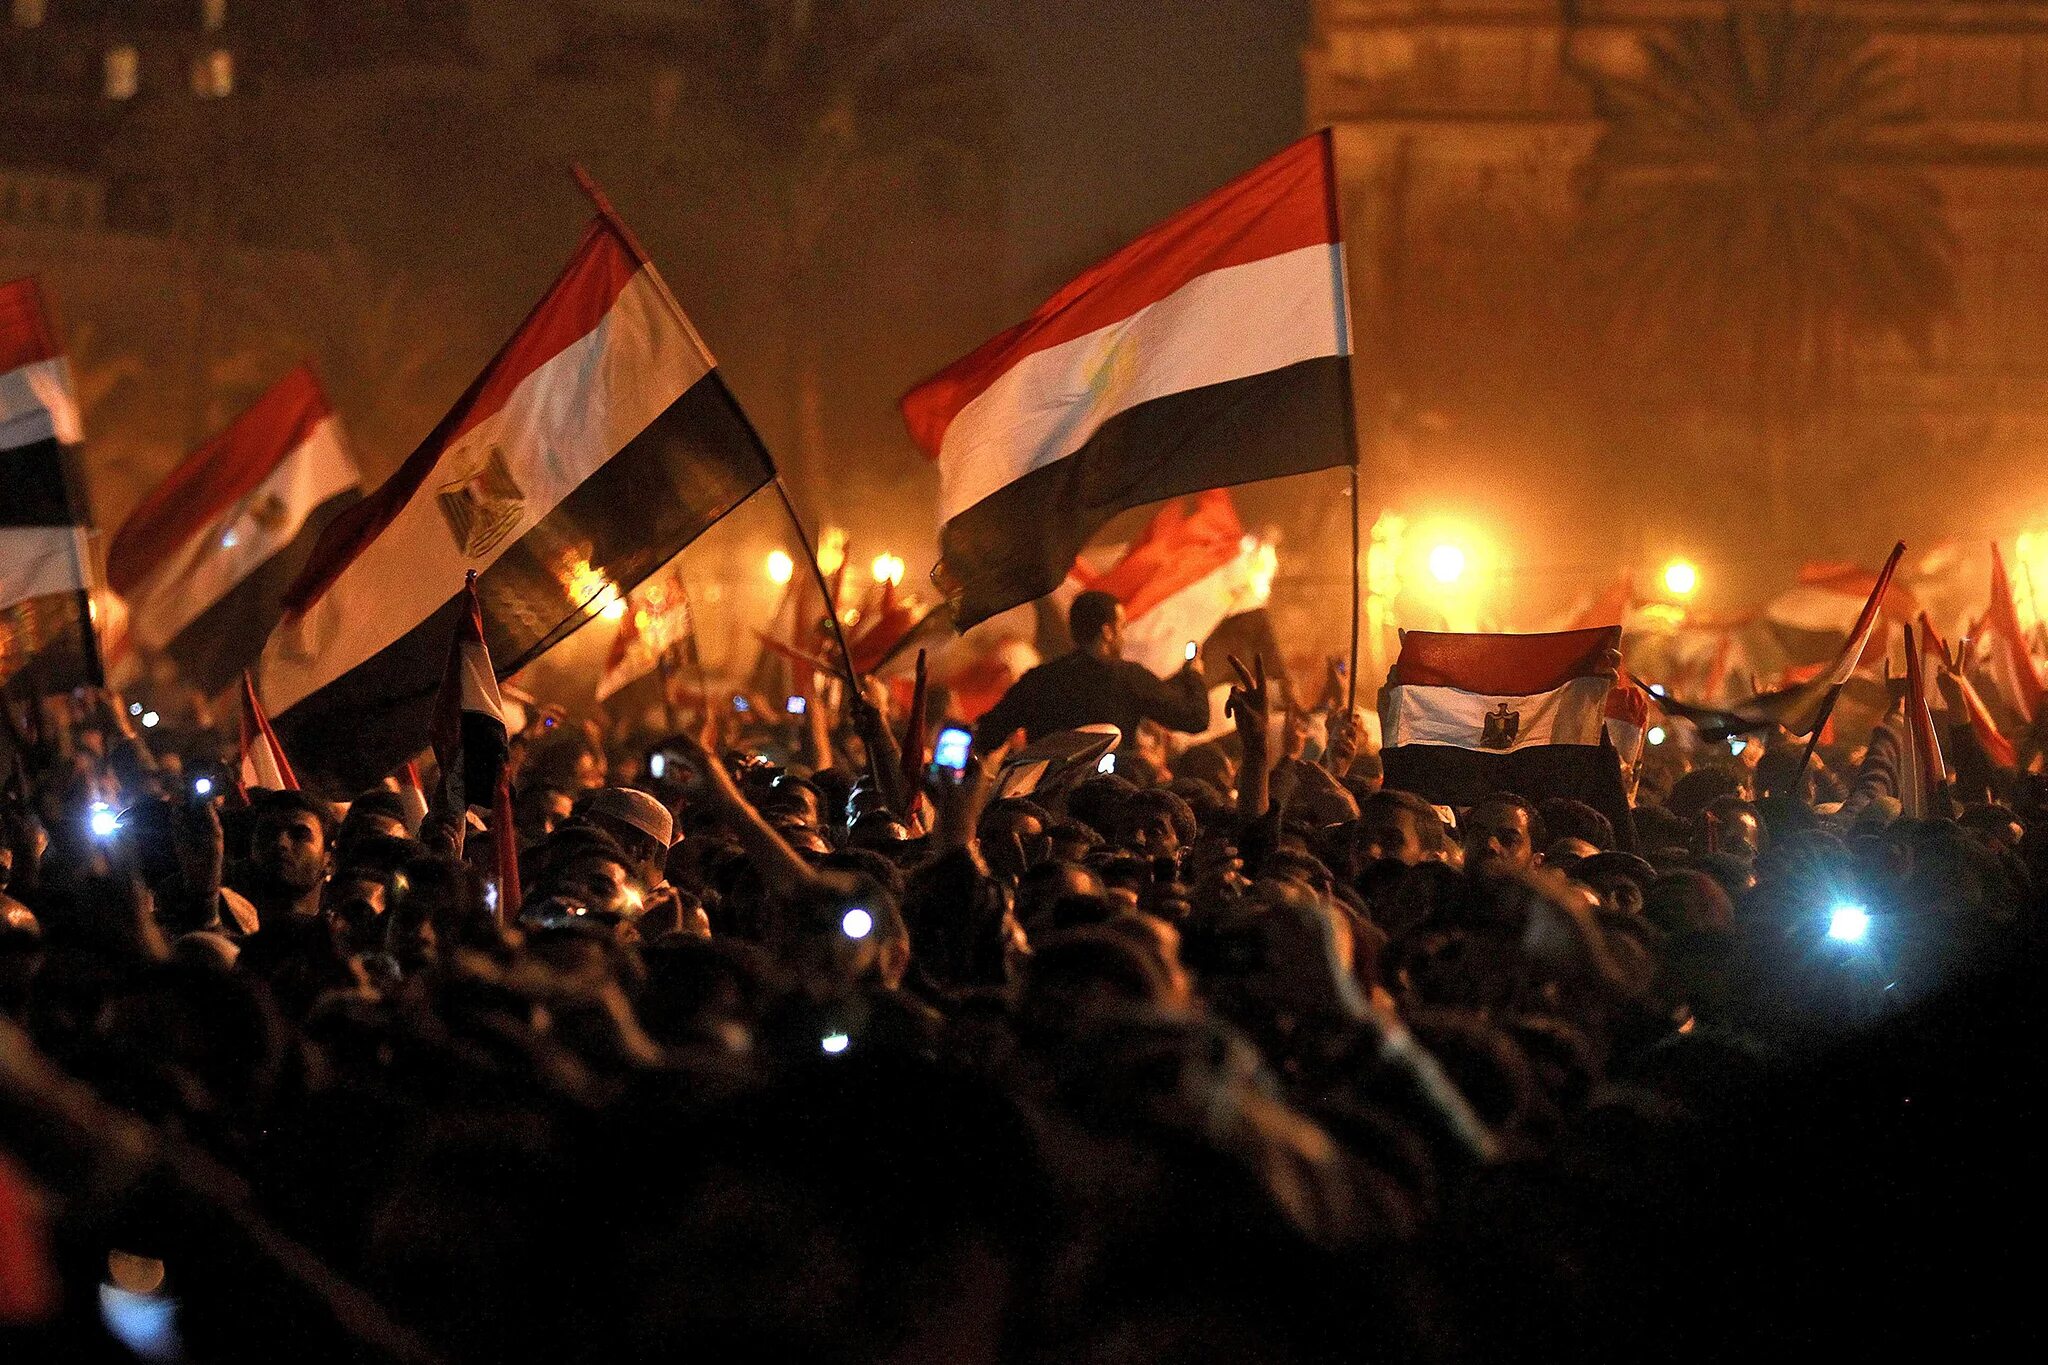 30 июня 1 8. Революция в Египте (2011-2013). Революция в Египте 2011. Восстание на площади Тахрир. 25 Января 2011 Египет.